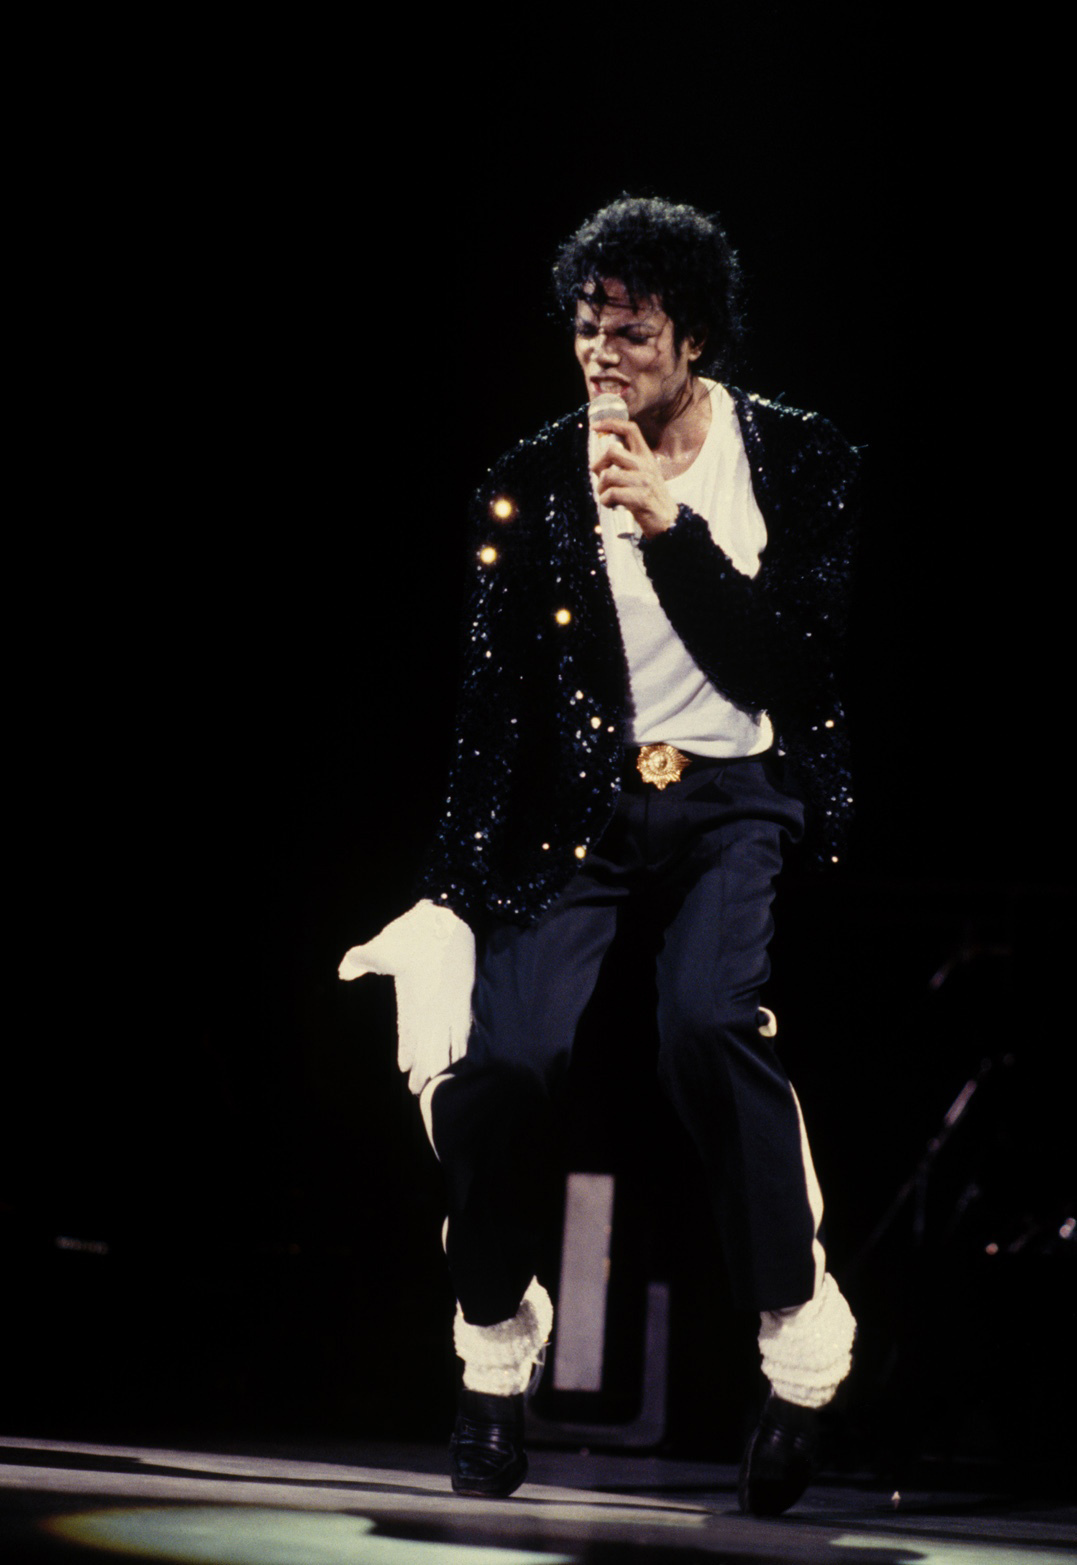 Bad, Badder - The Bad World Tour *Billie Jean* - Michael Jackson Photo ...